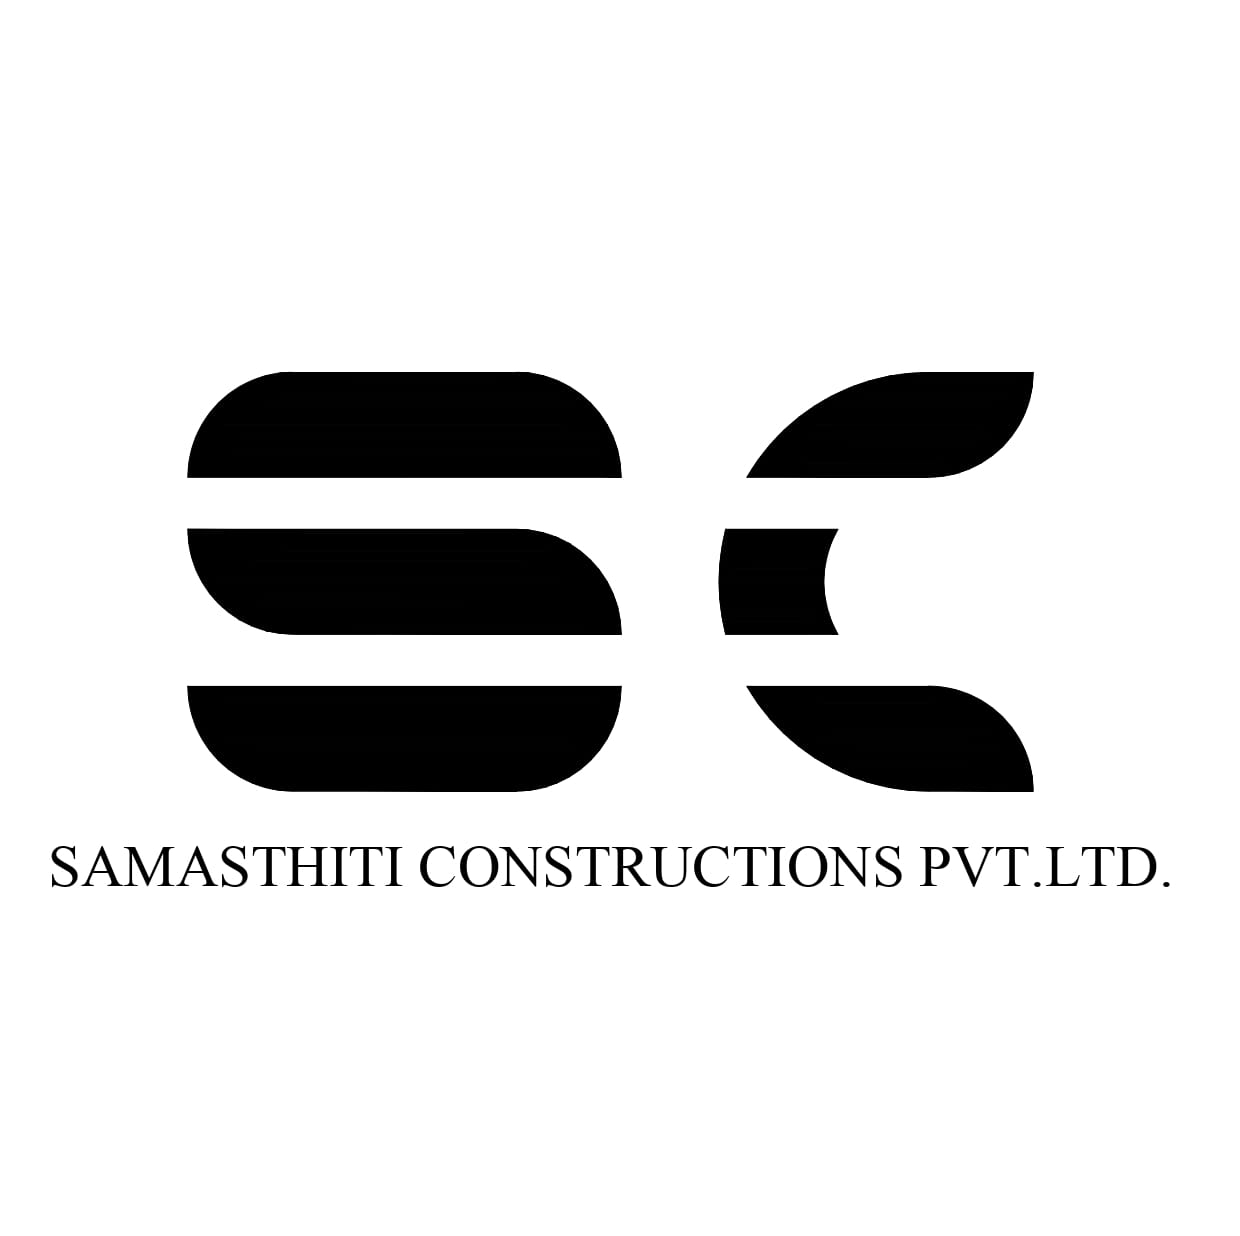 Samasthiti Constructions Pvt.Ltd|IT Services|Professional Services